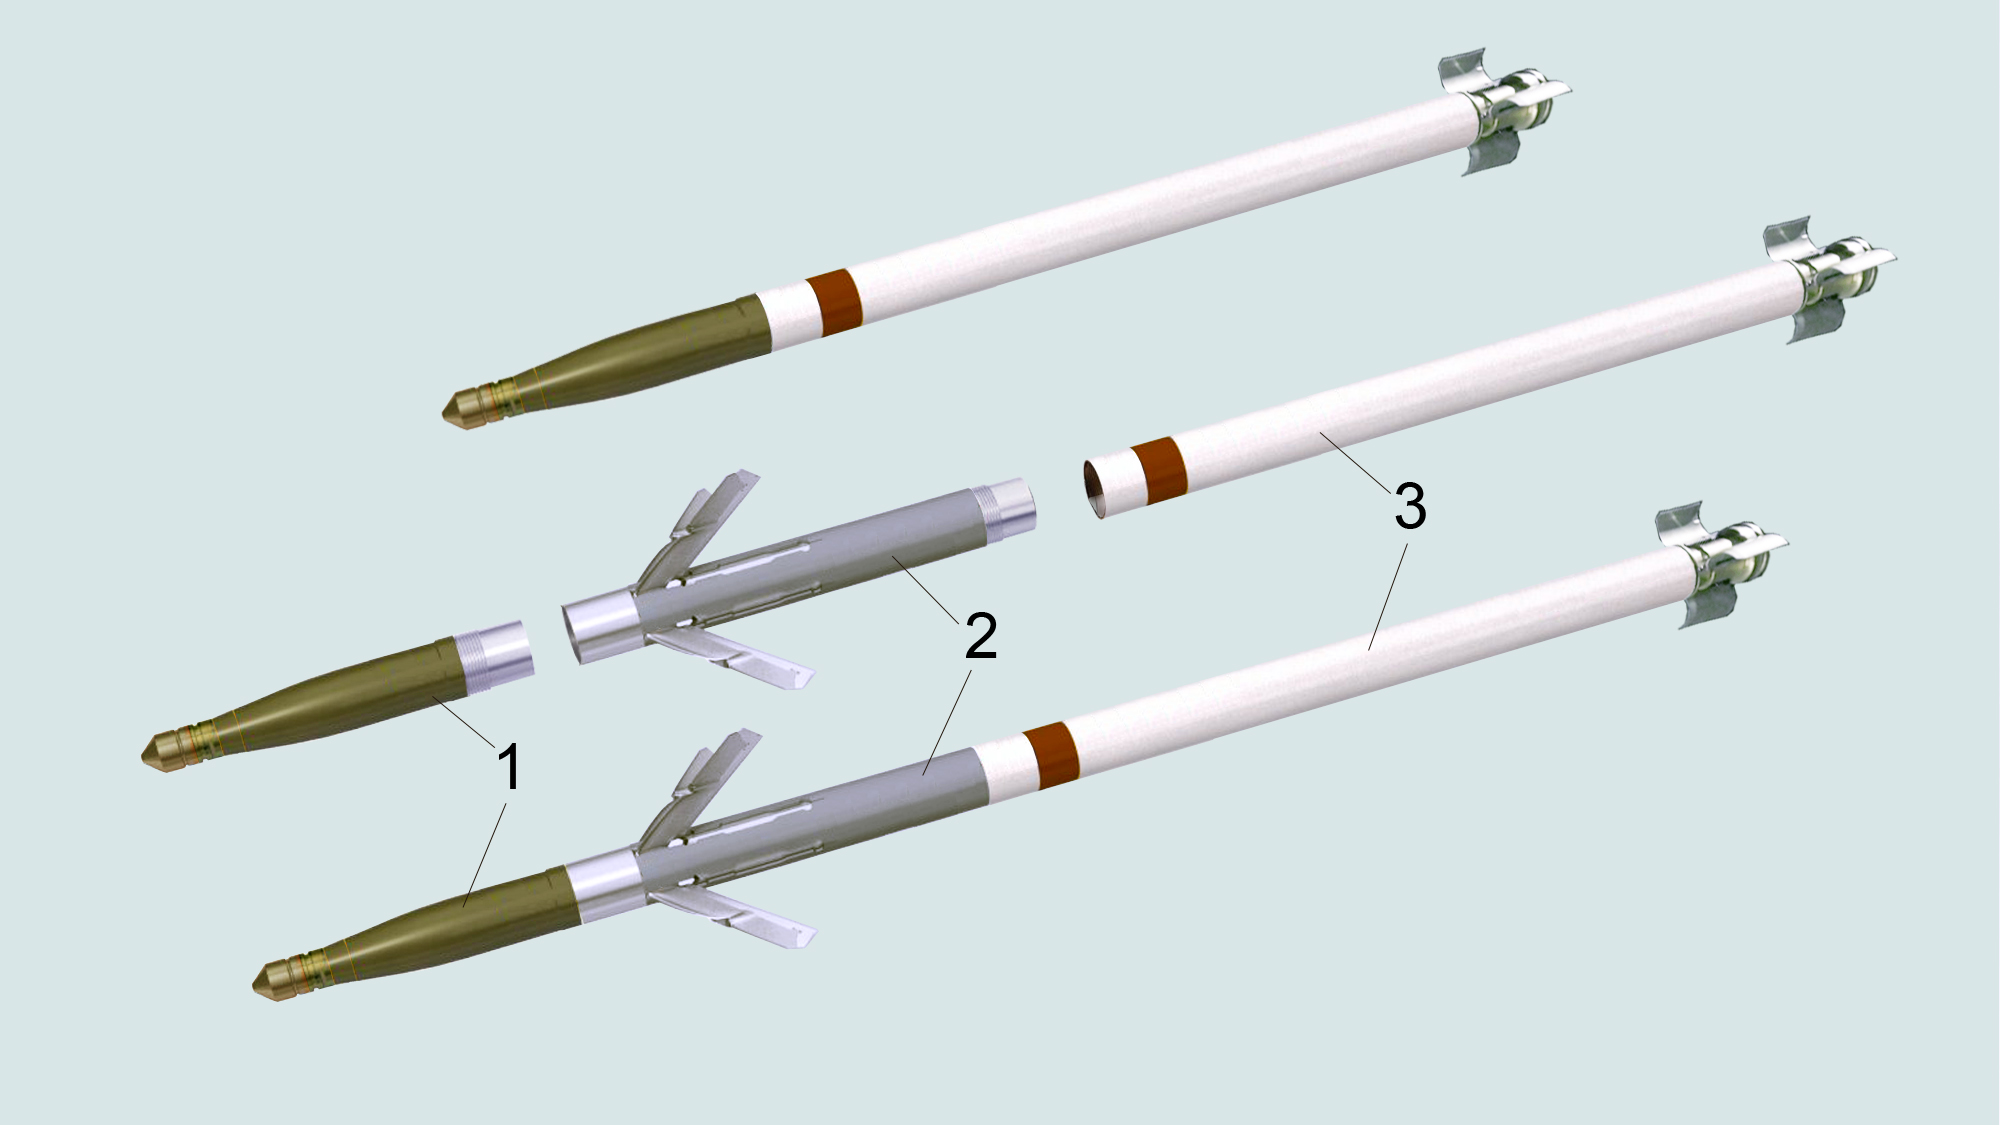 Ракеты с лазерным наведением APKWS. Фото: сommons.wikimedia.org